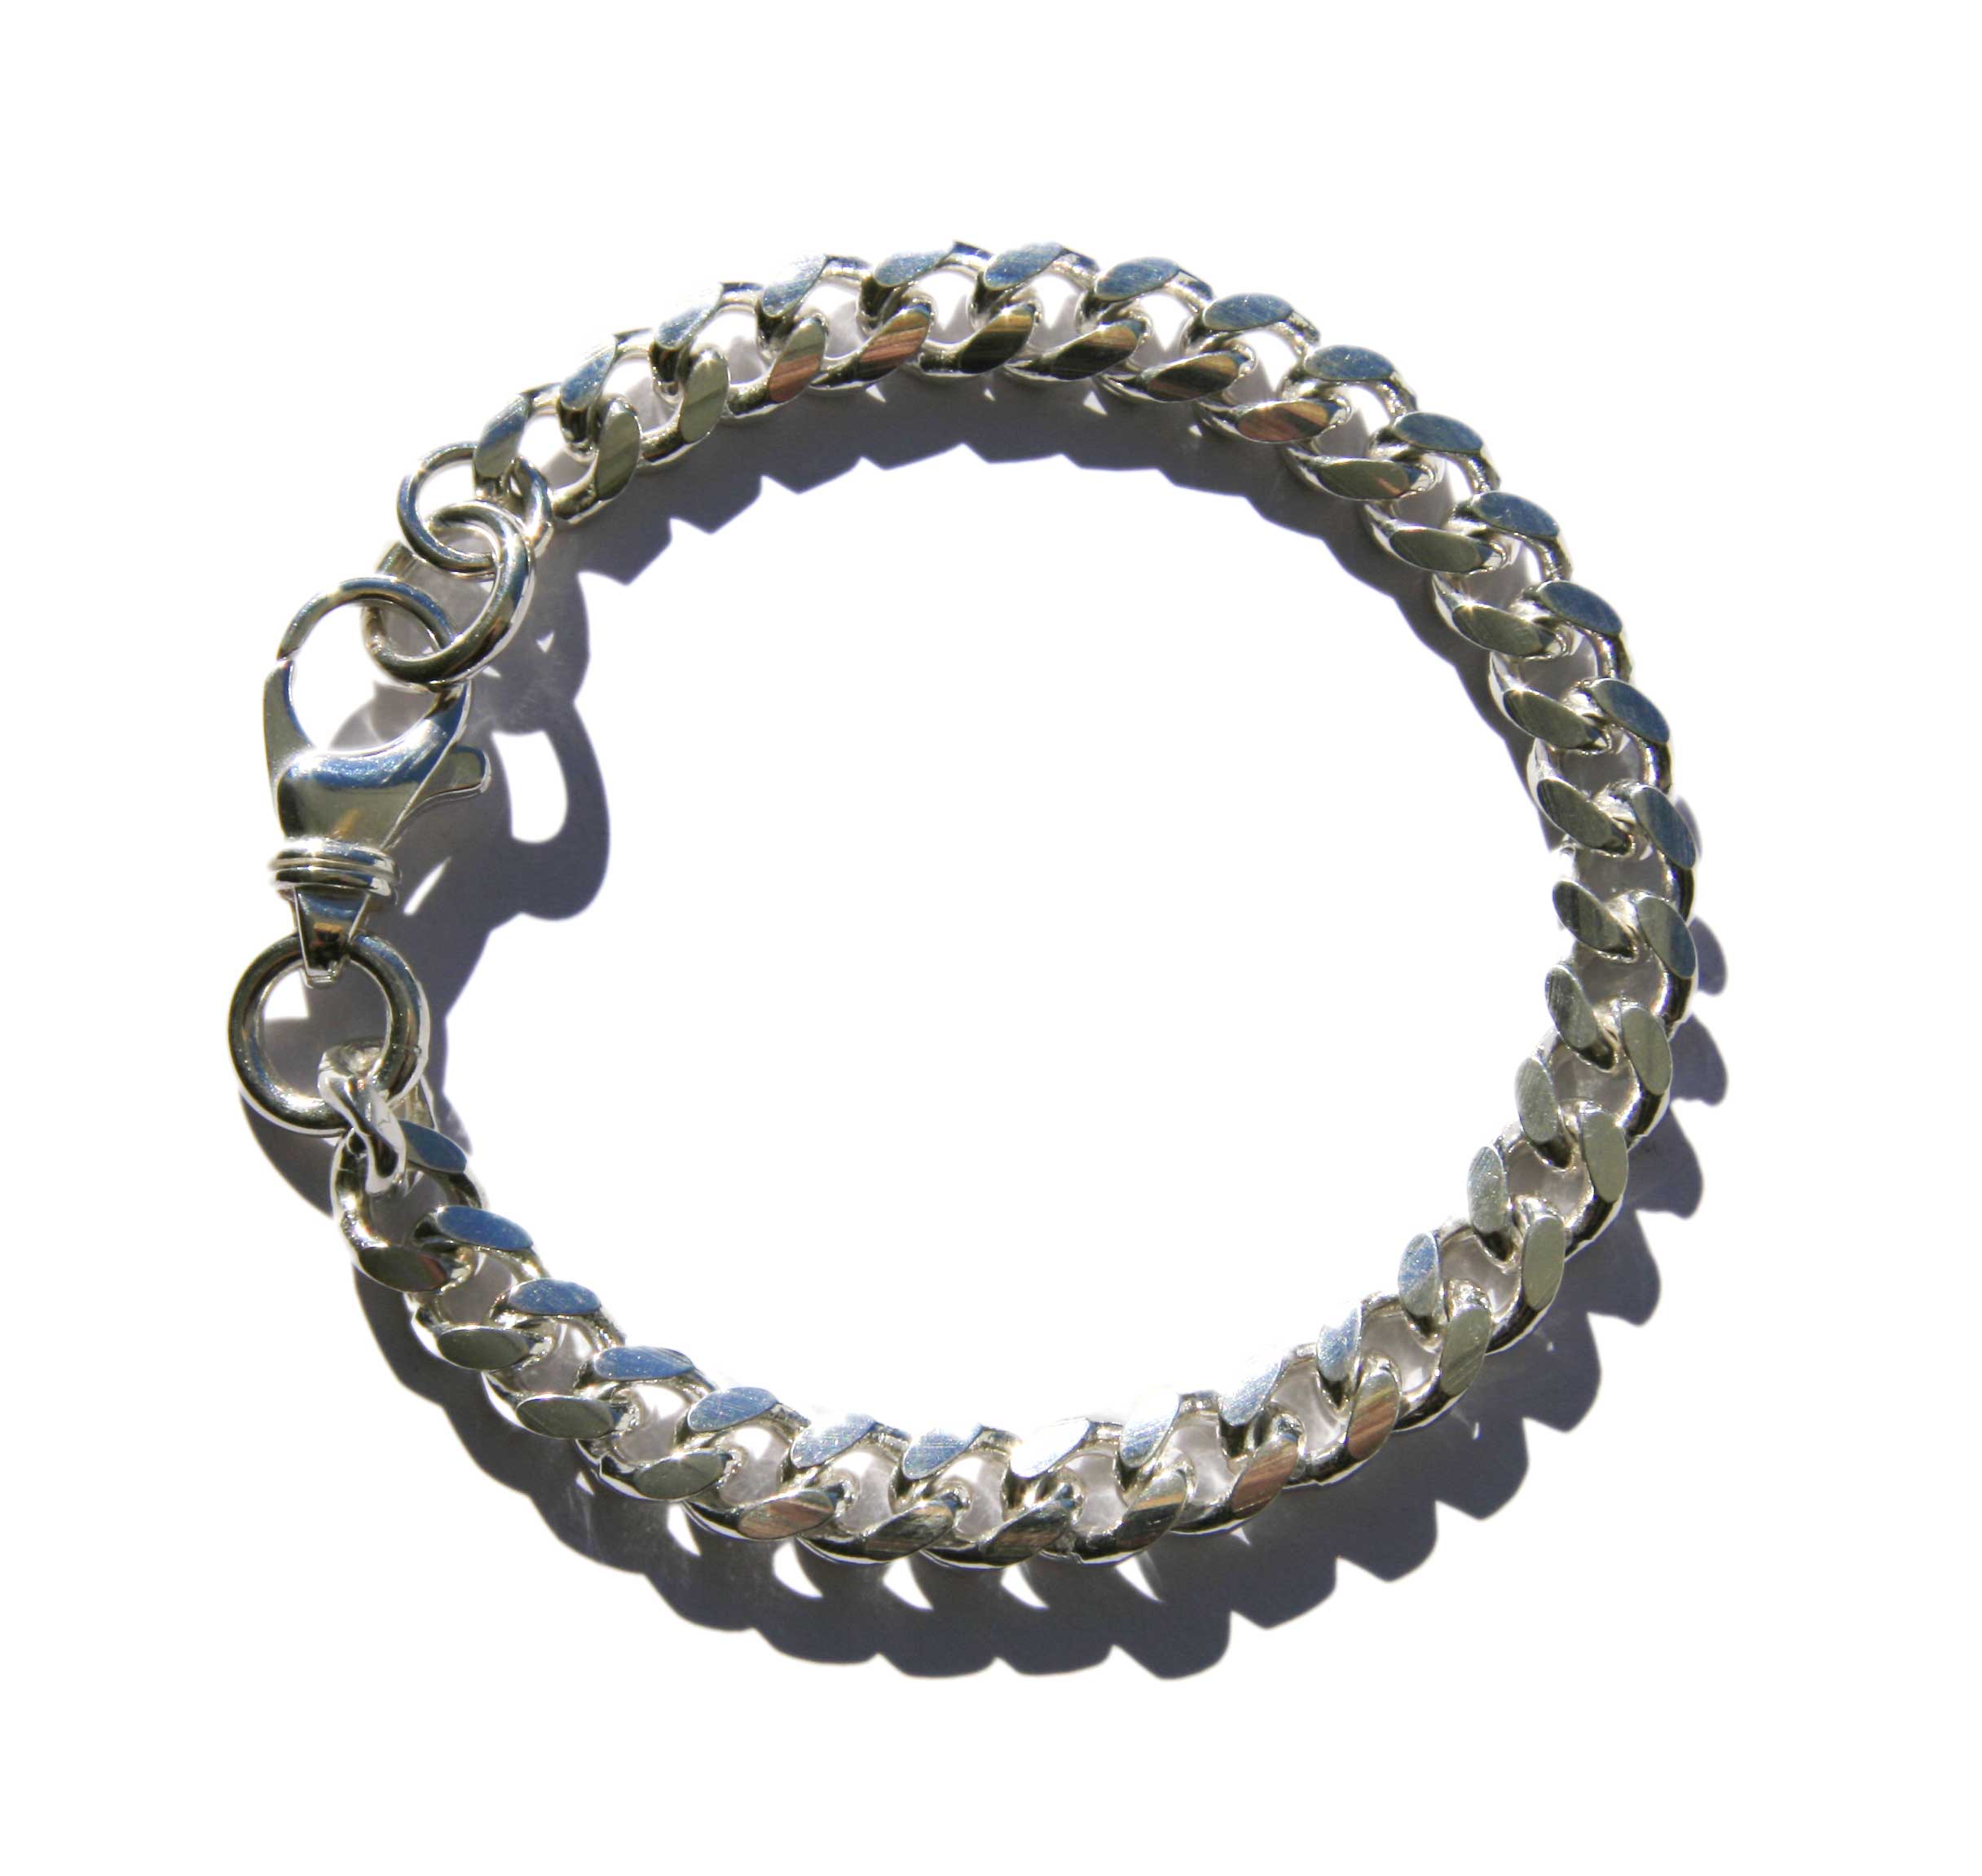 Woman's silver curb chain bracelet